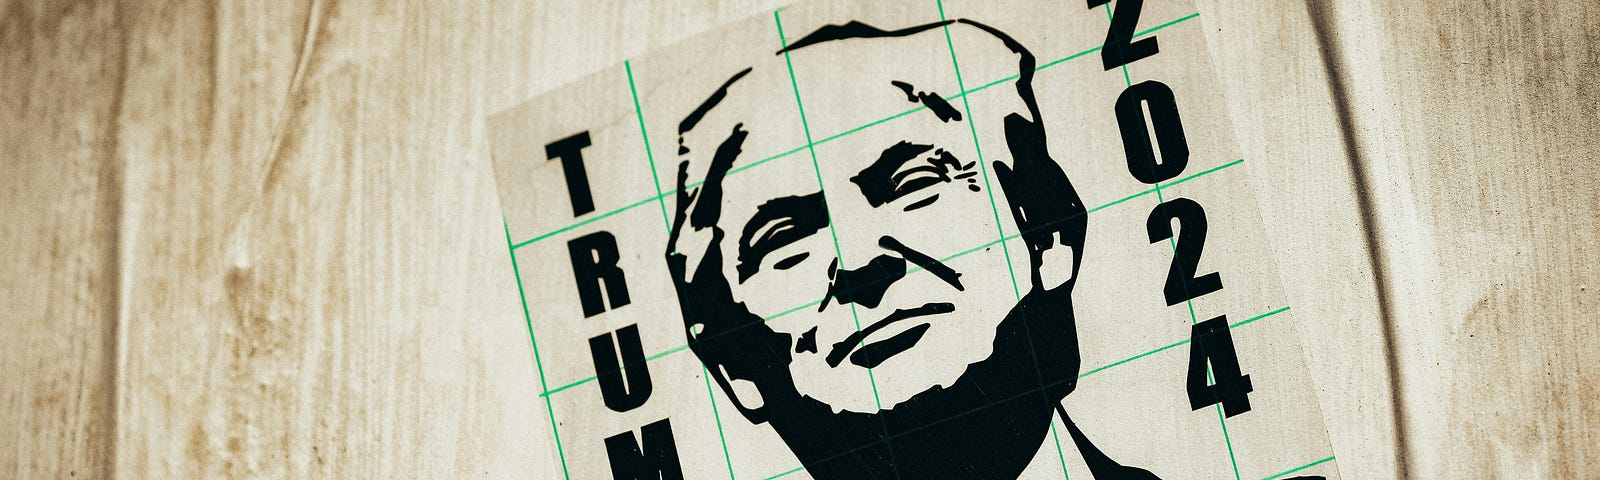 Poster of Donald Trump